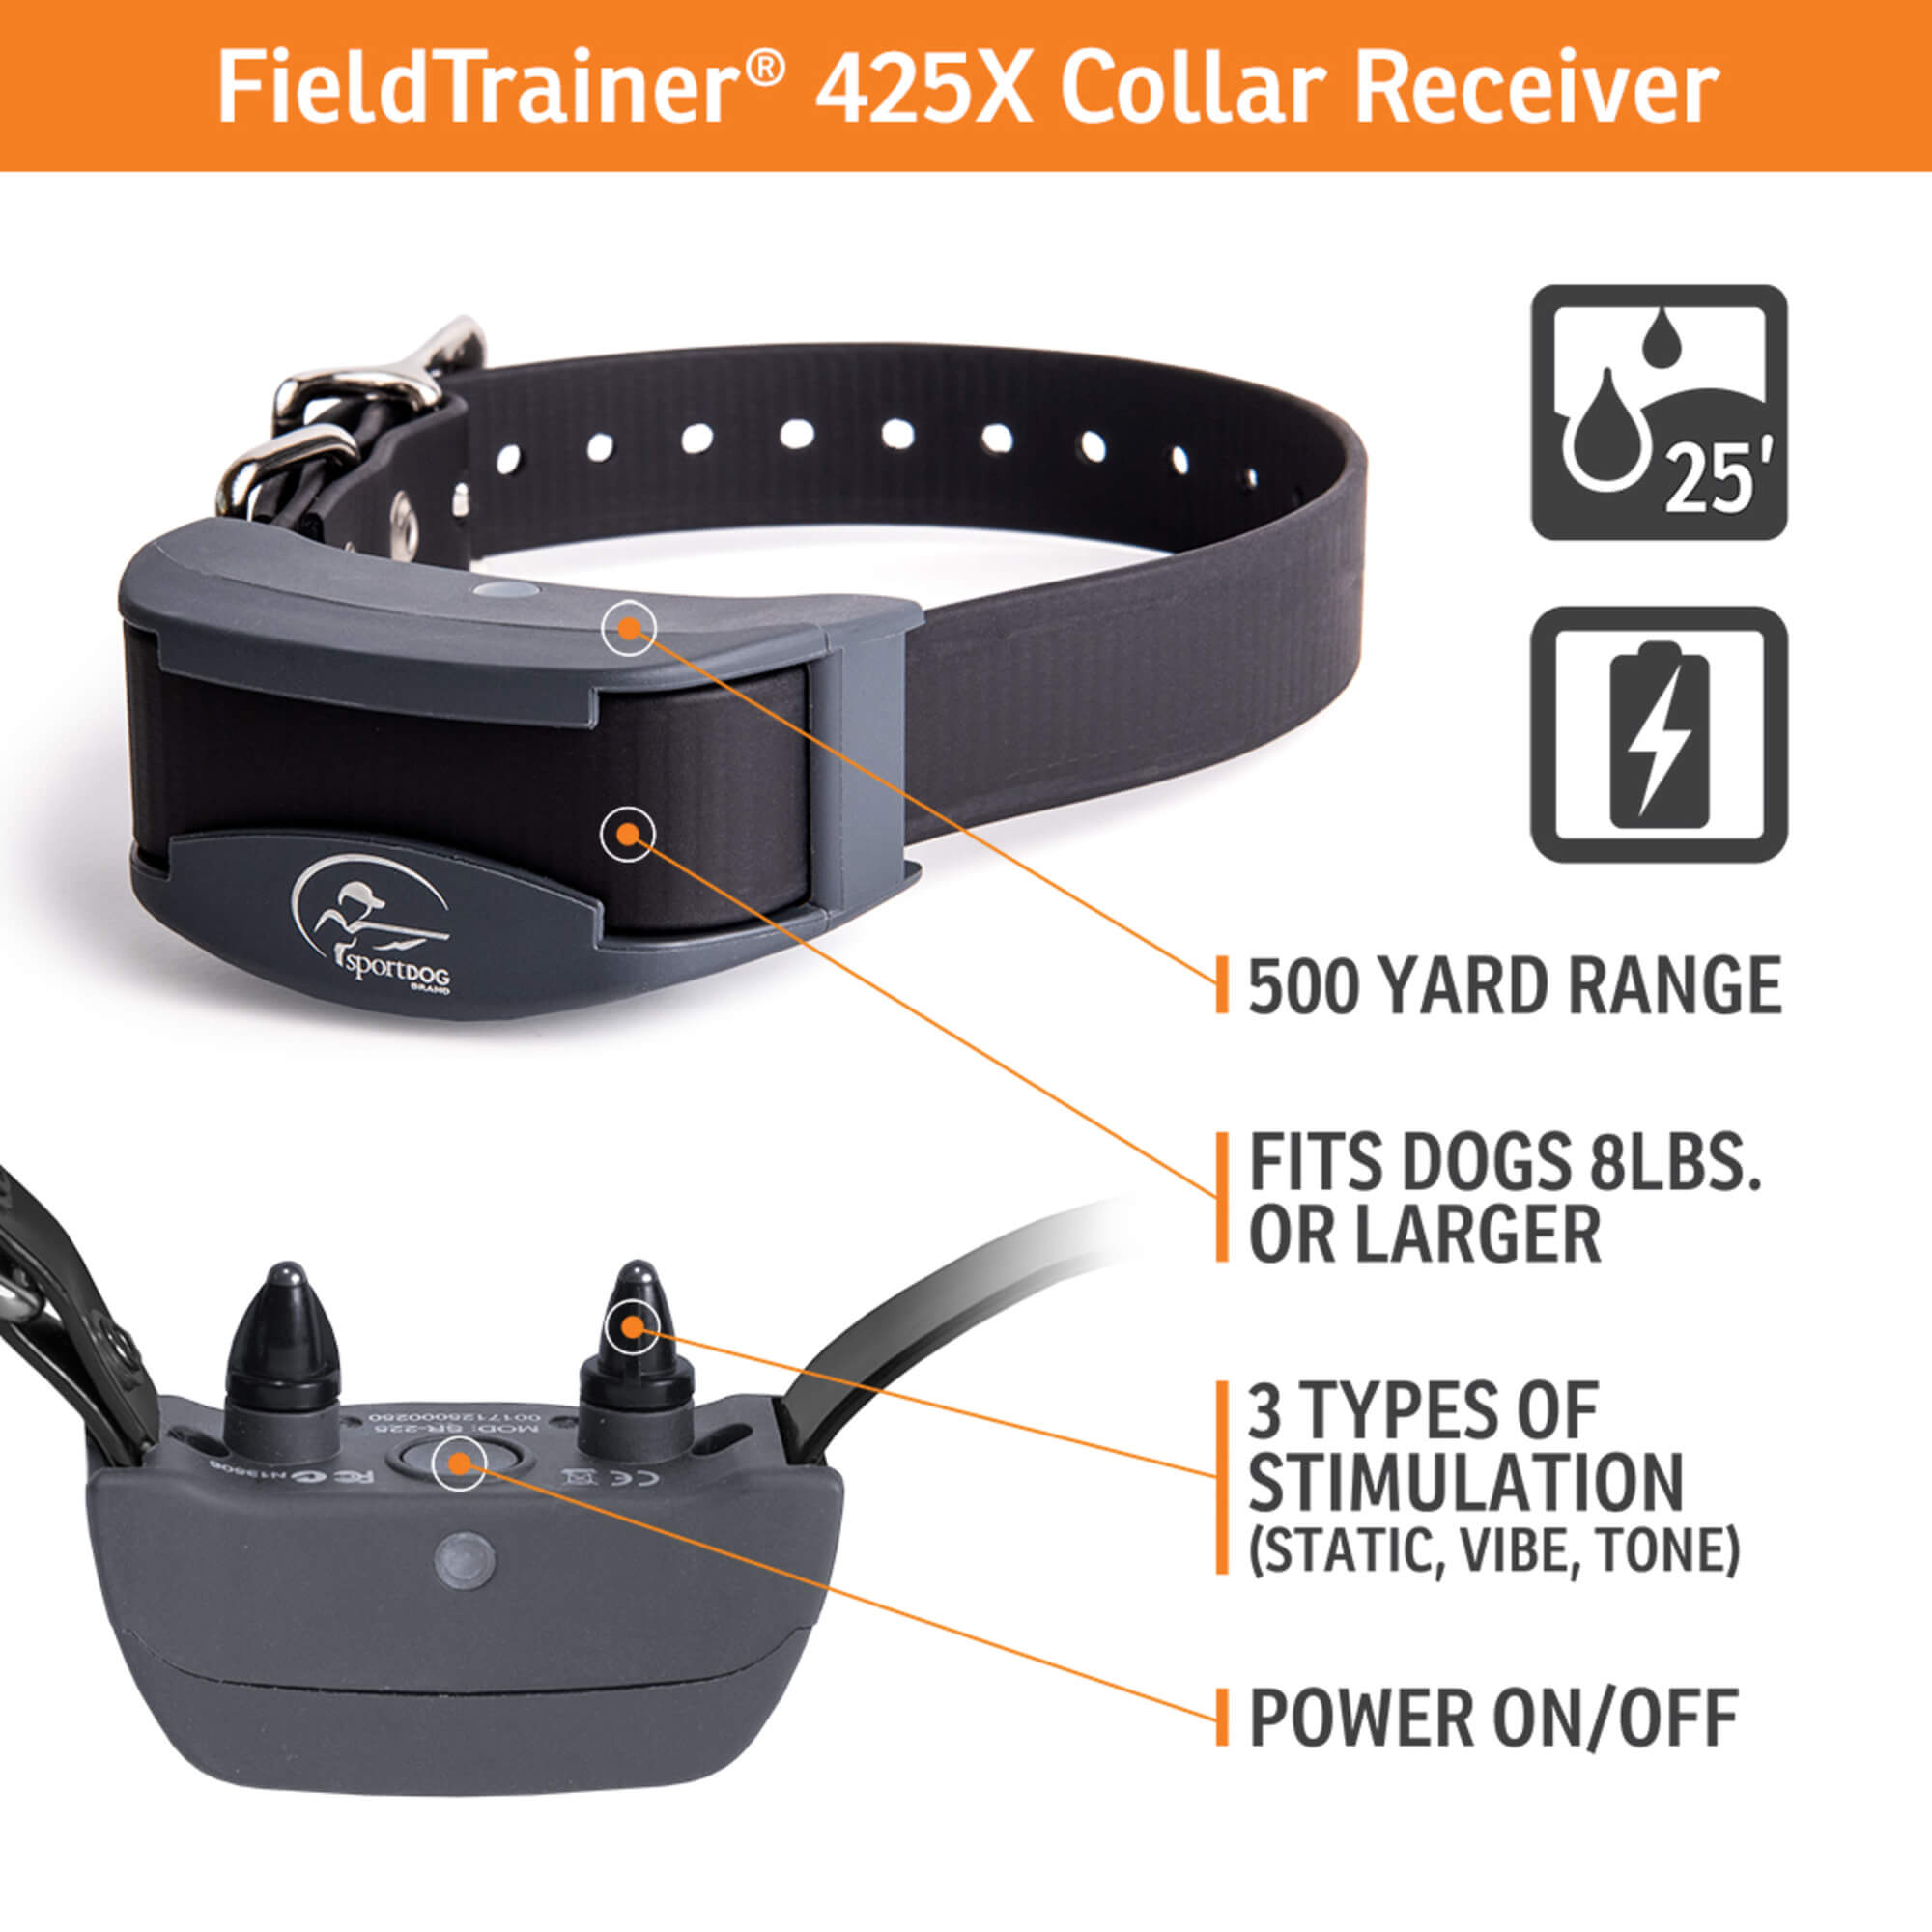 SportDog Field Trainer 425x dog collar receiver